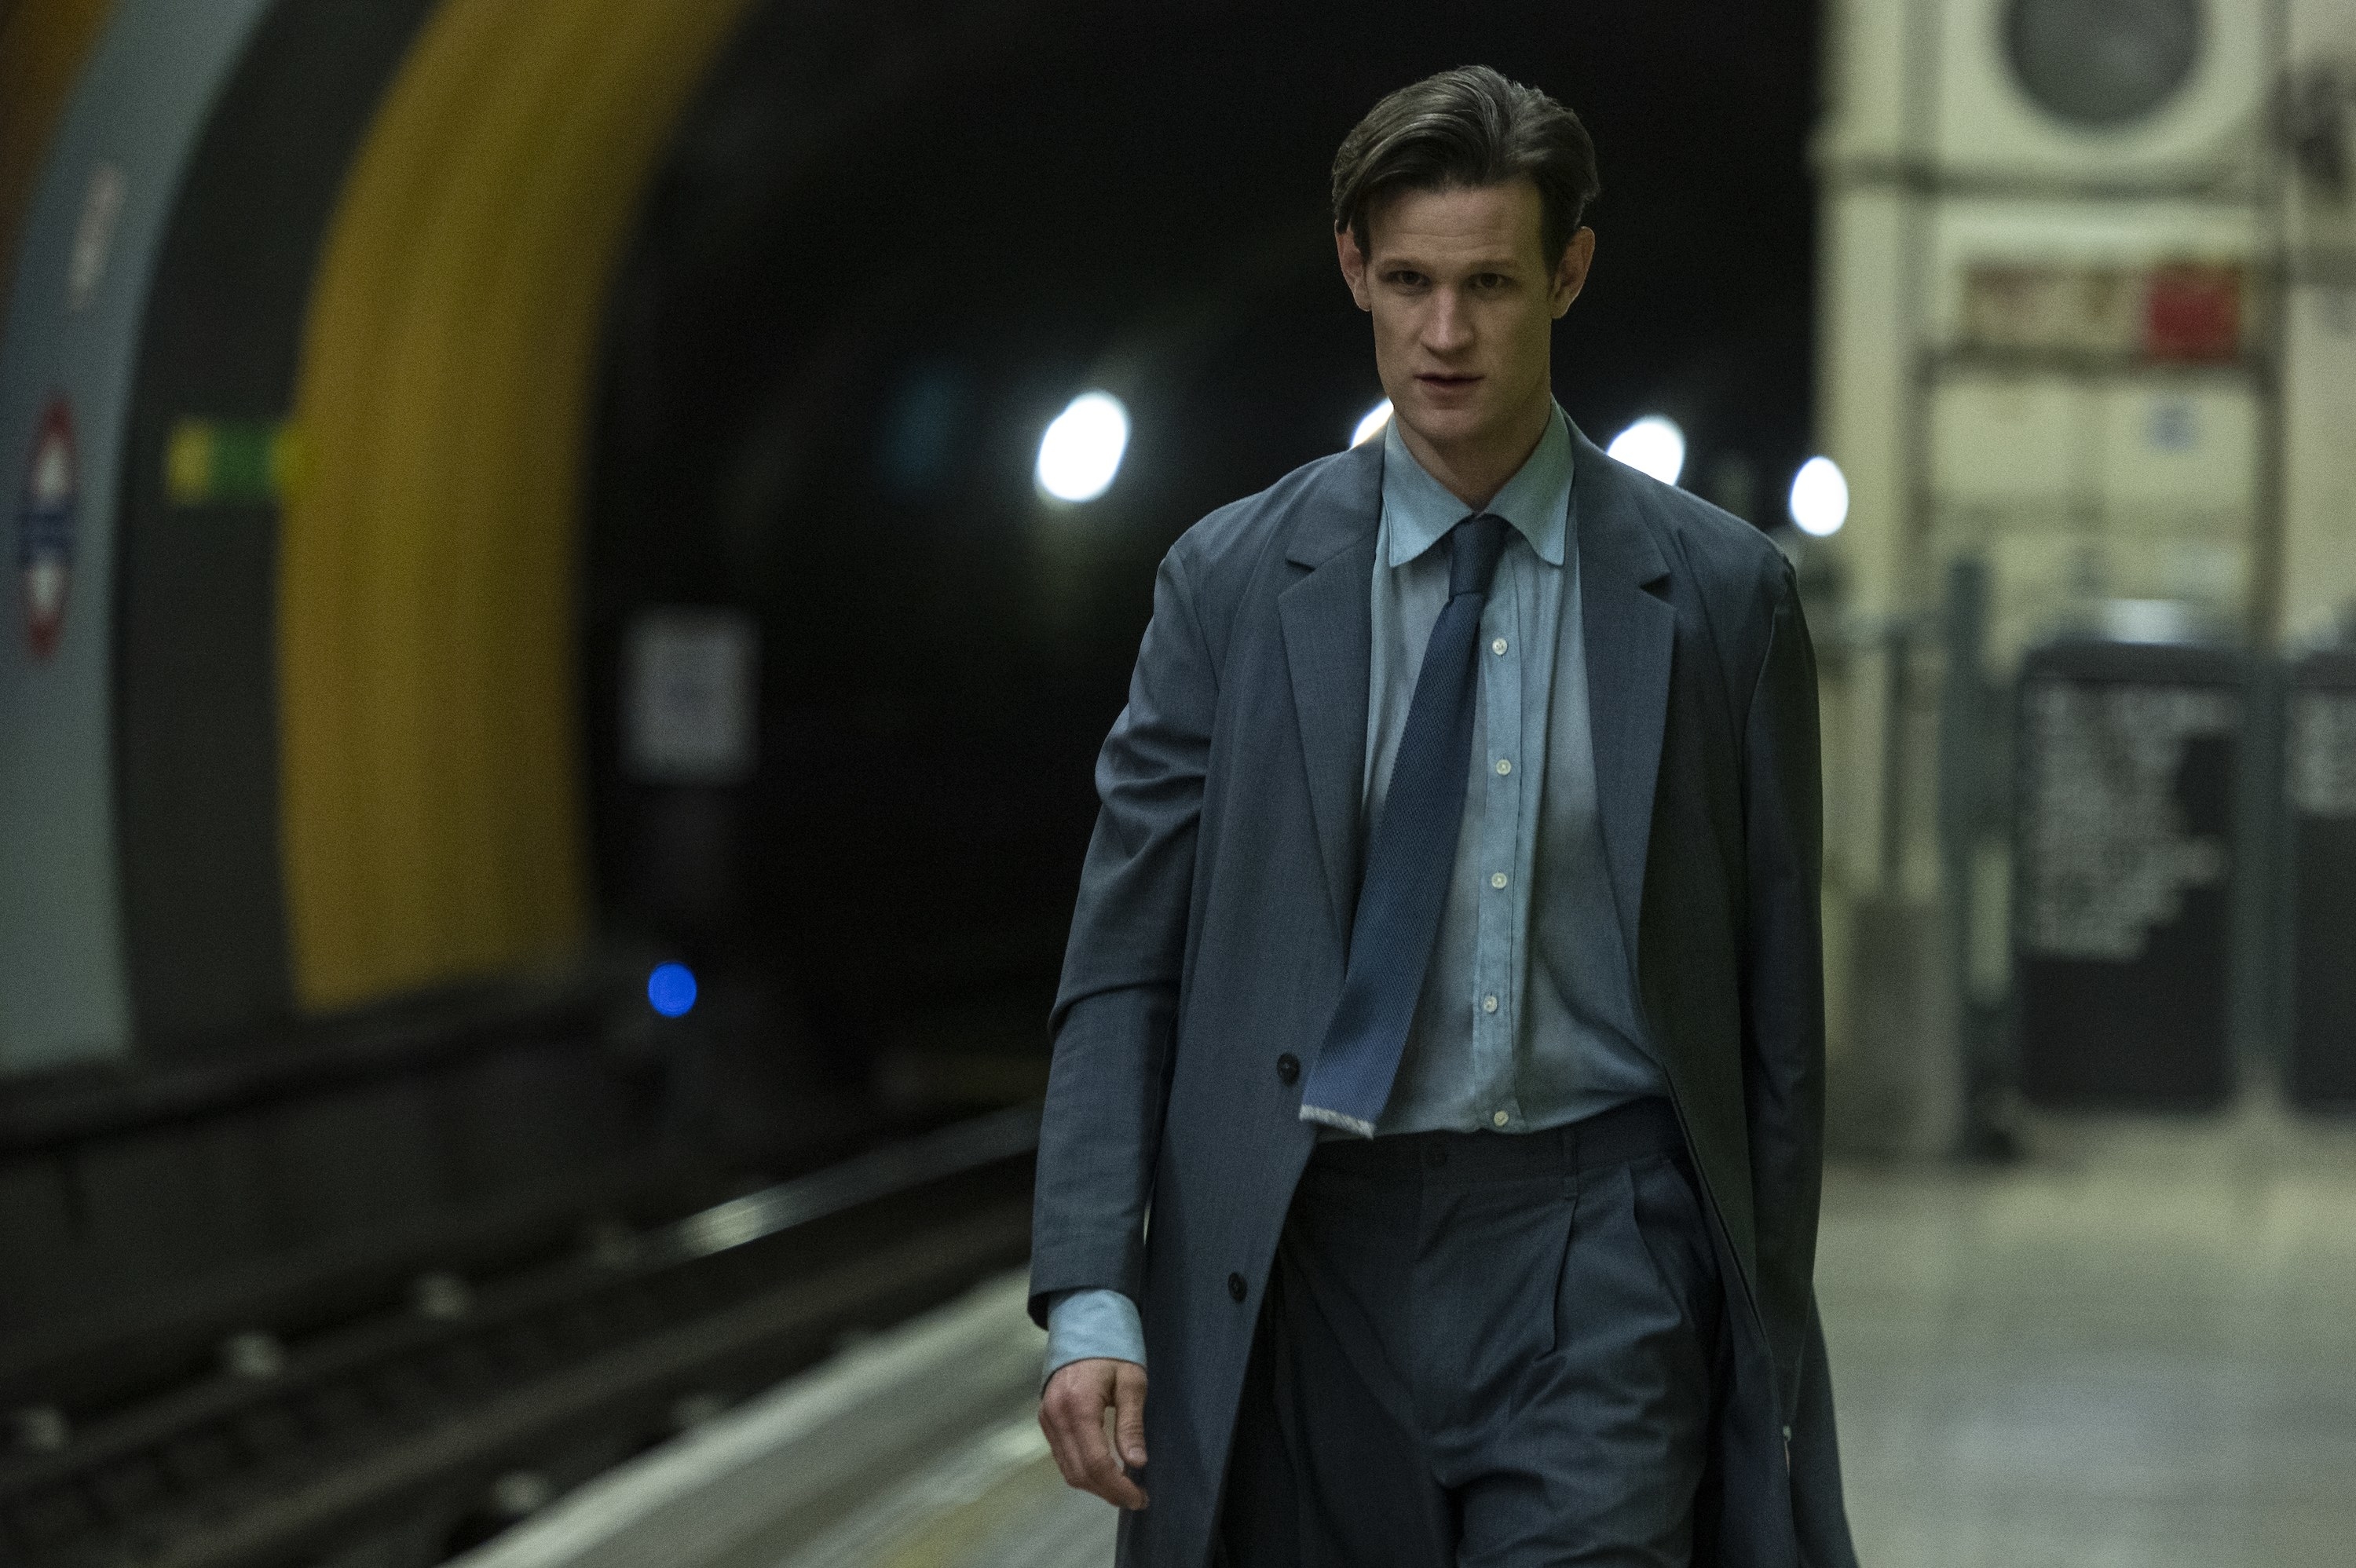 Milo walking down a train platform in a long grey coat, light blue shirt and dark blue tie